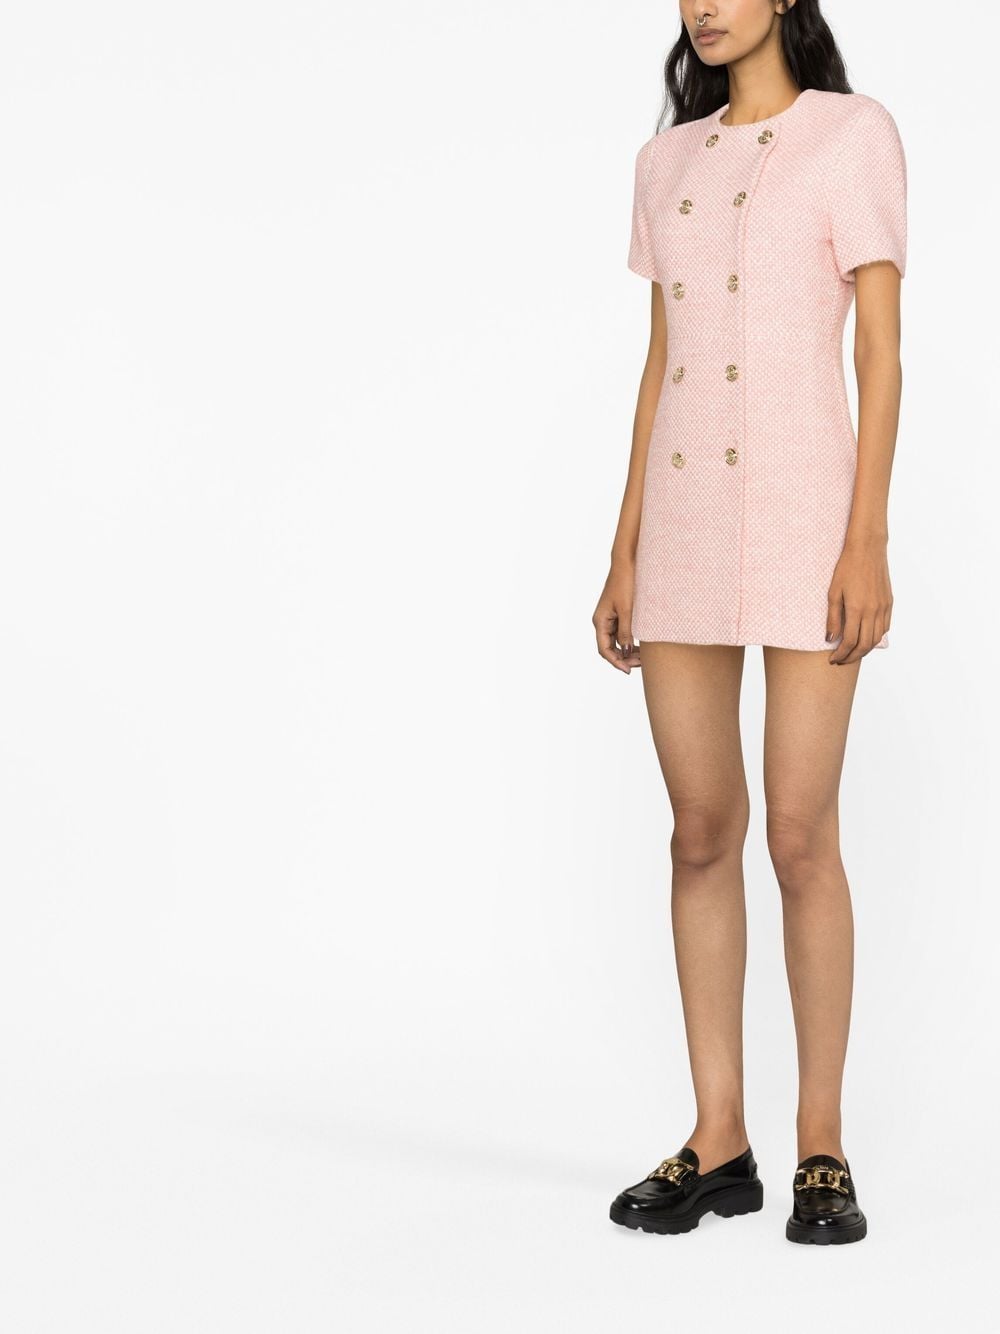 Smart Pink Button Up Tweed Dress - All Dresses